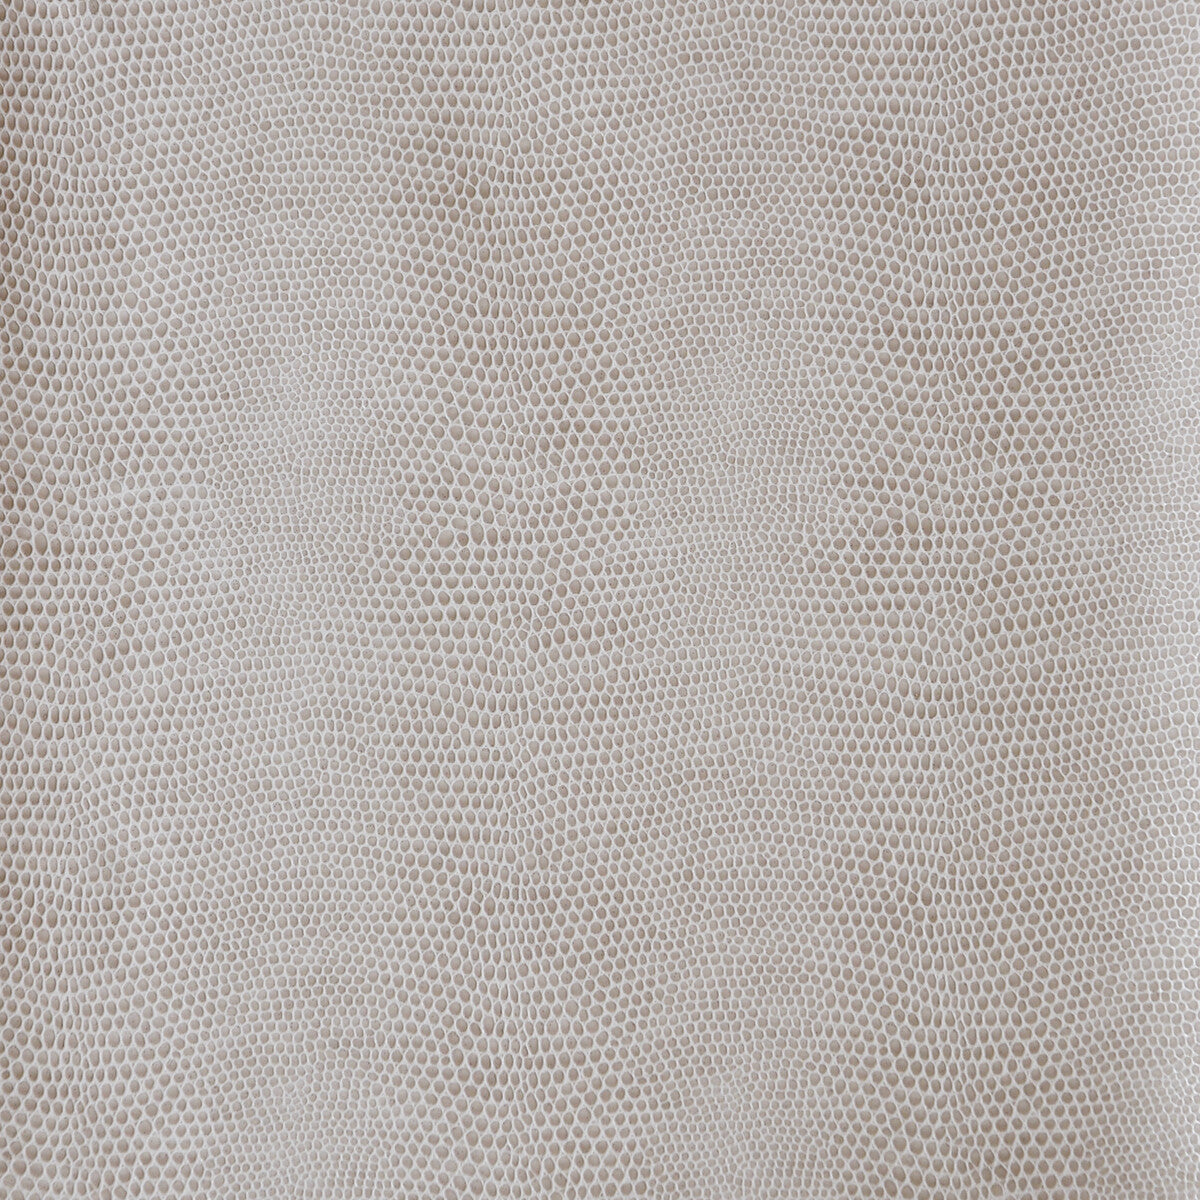 Kravet Design fabric in derek-11 color - pattern DEREK.11.0 - by Kravet Design